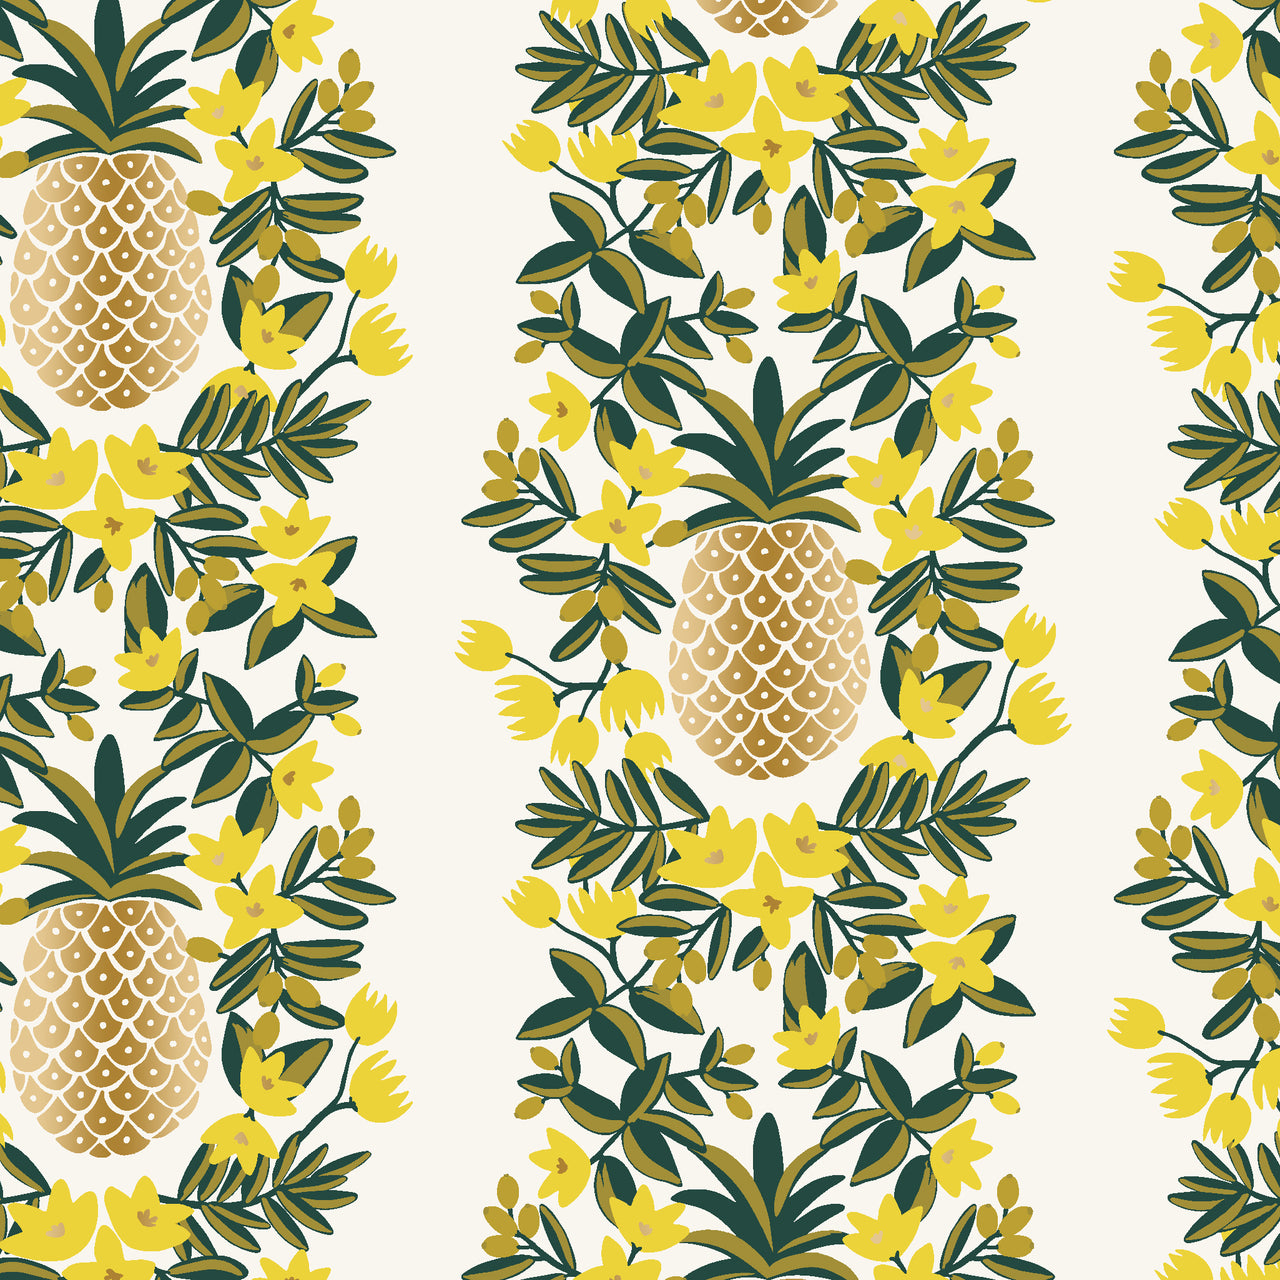 Primavera by Rifle Paper Co : Pineapple Stripe in Cream Metallic : Cotton and Steel